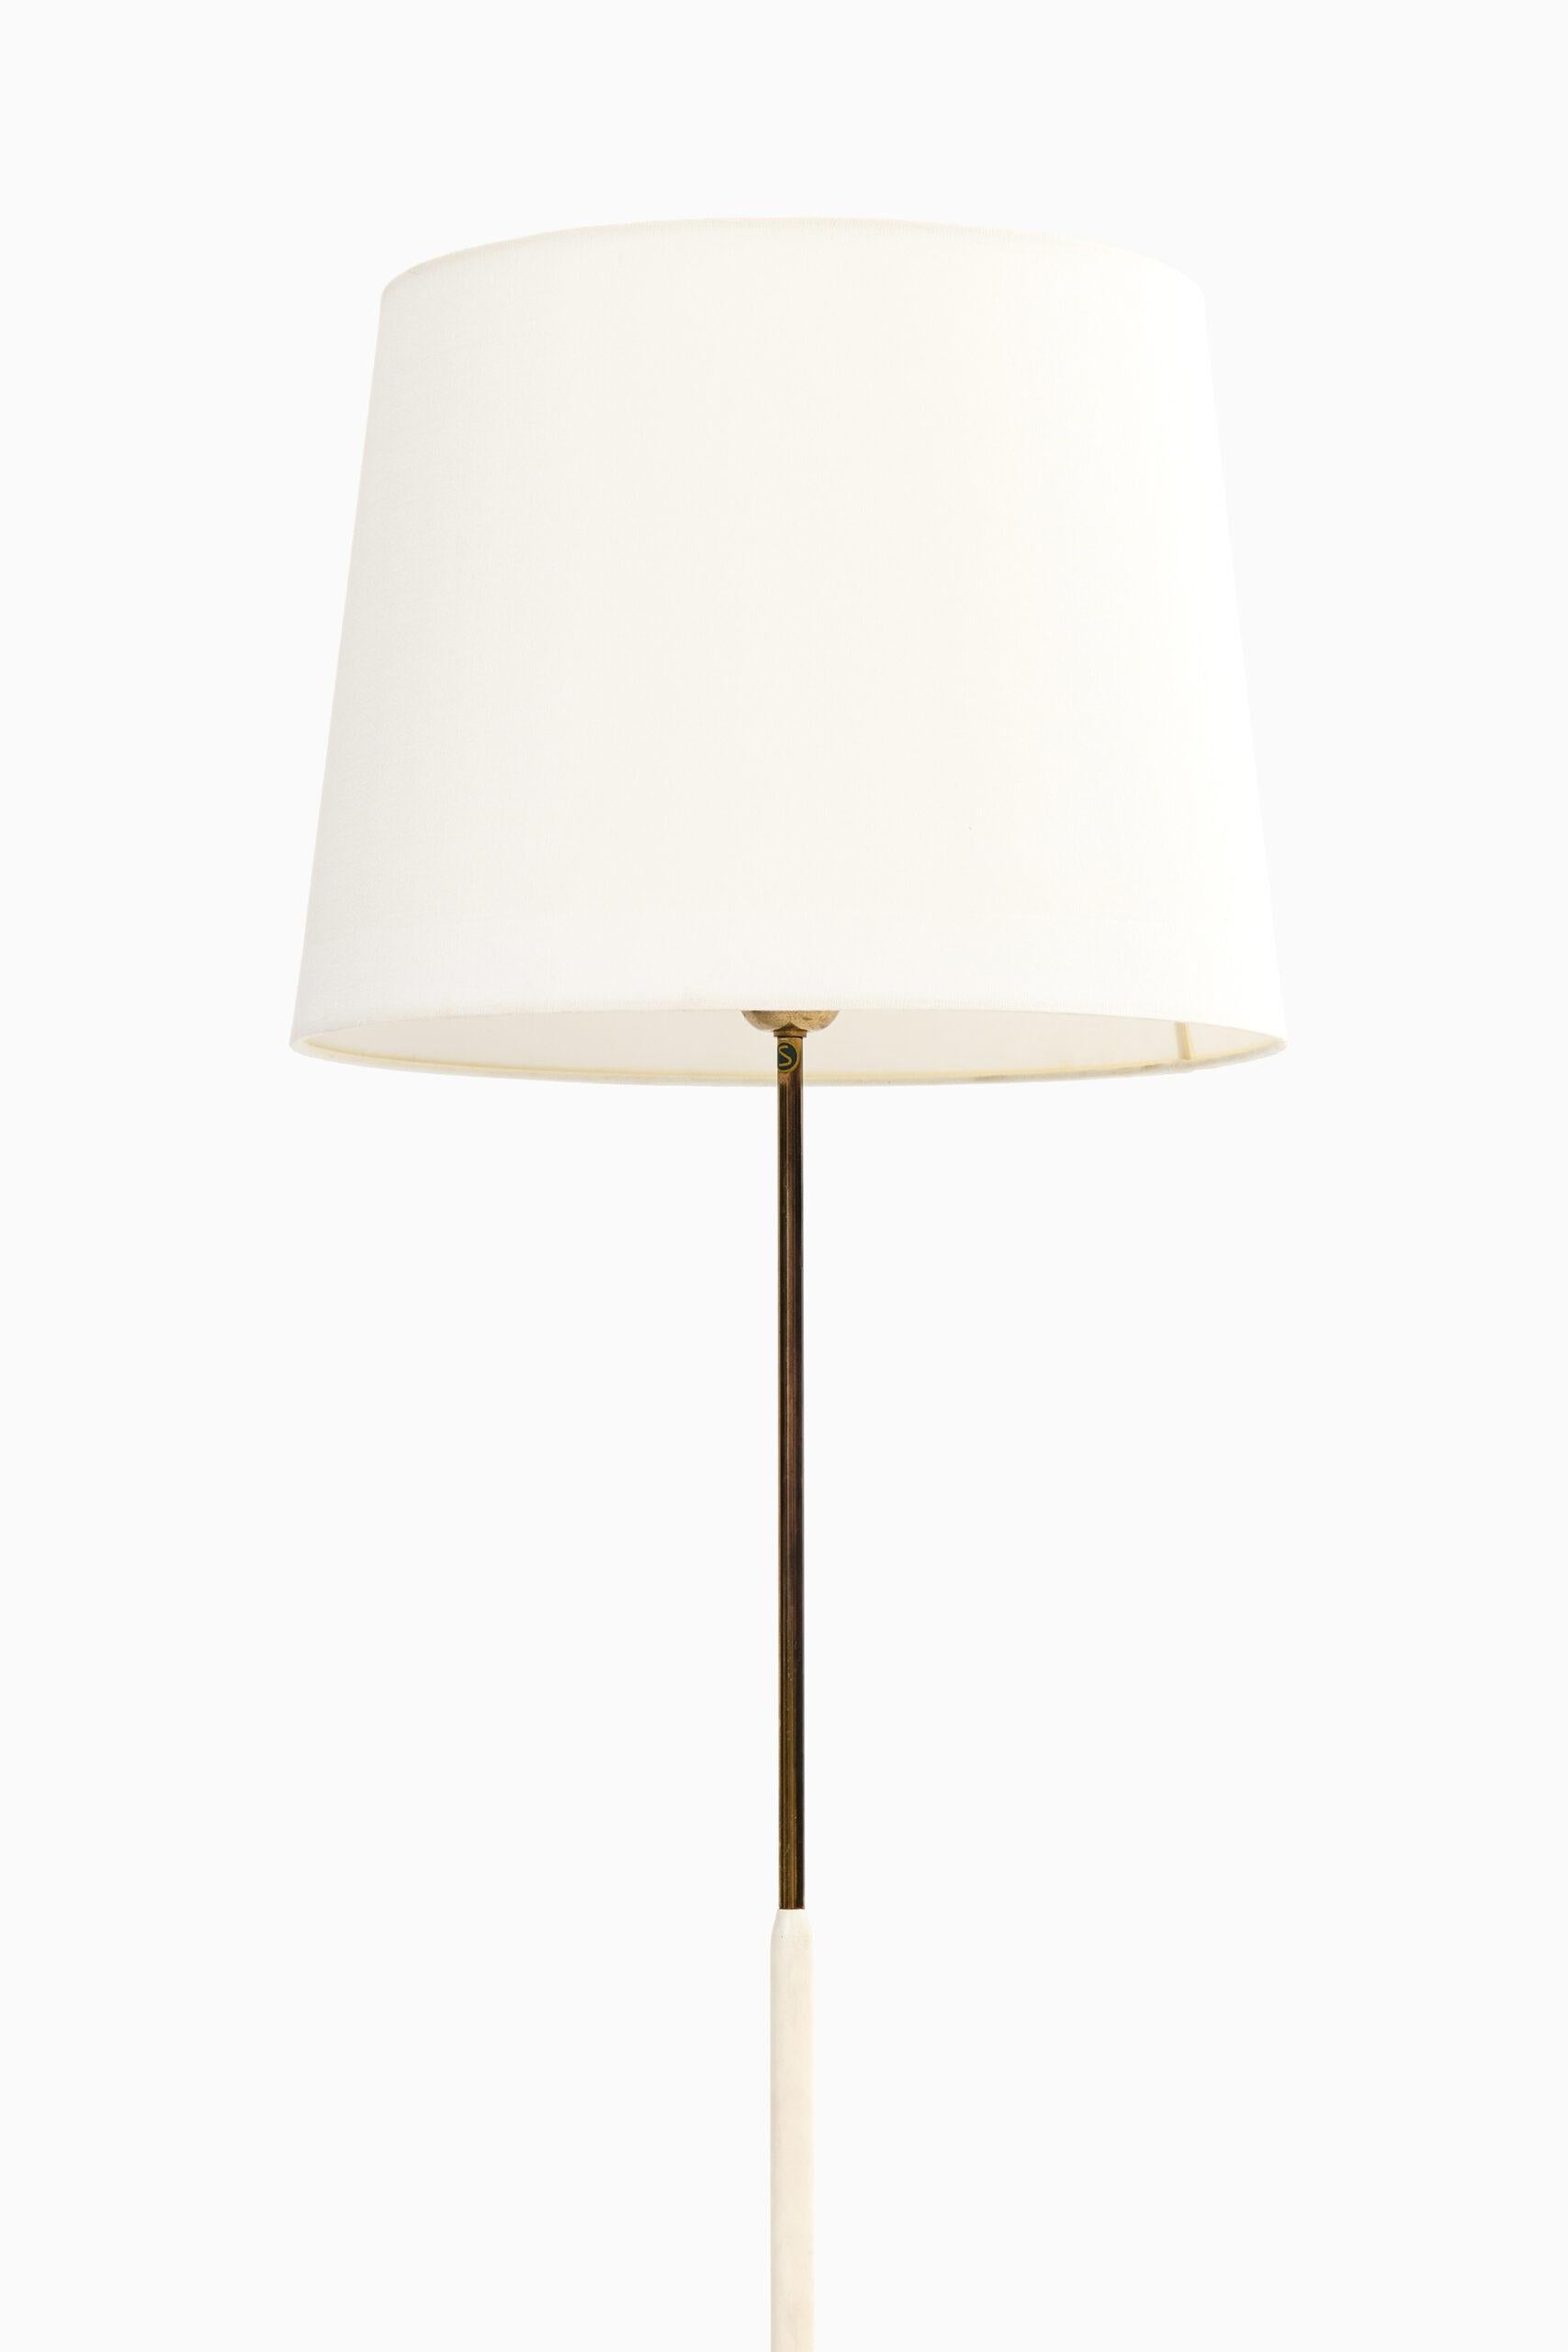 Scandinavian Modern Floor Lamps Produced by ASEA in Sweden For Sale